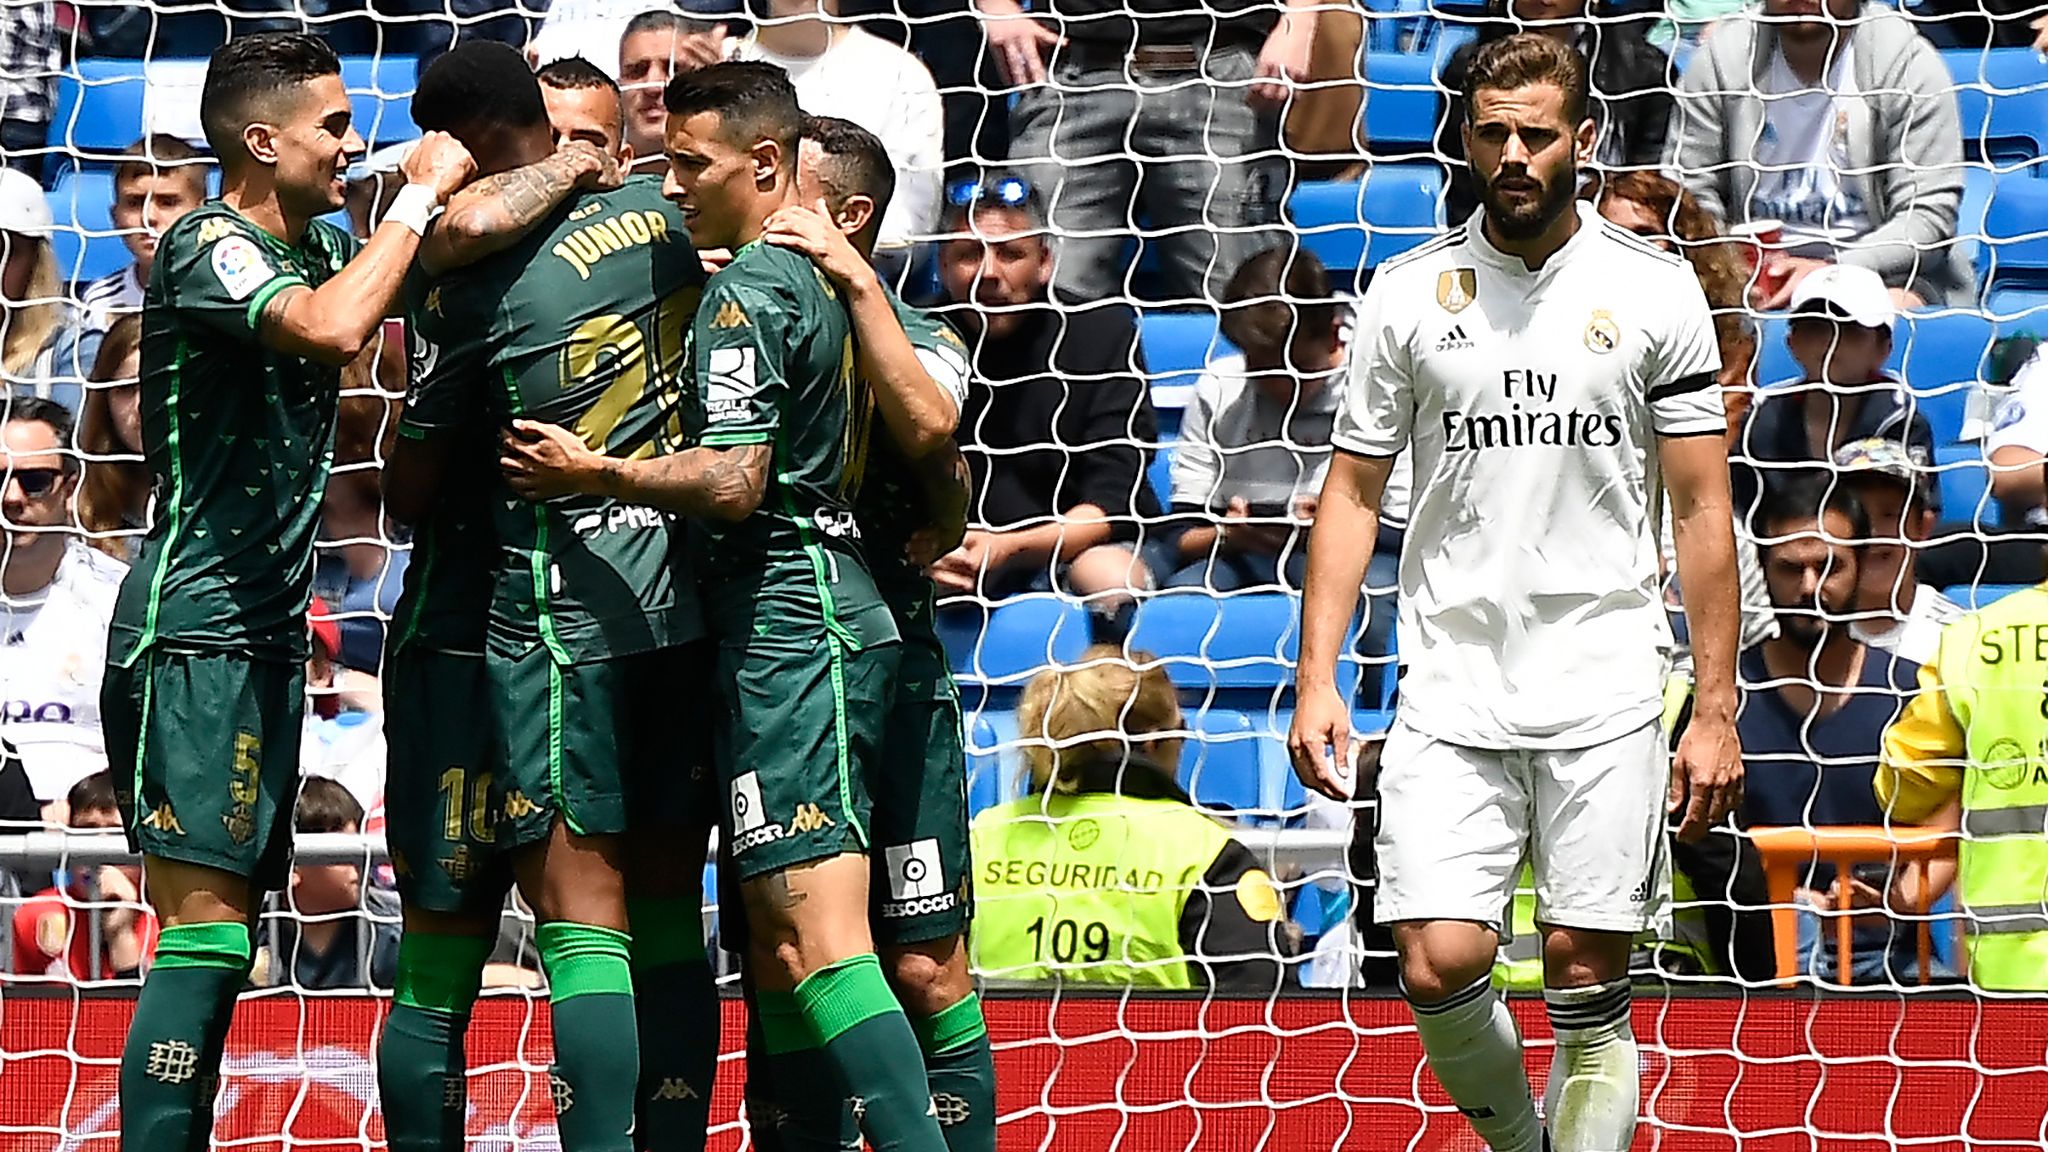 Real Madrid vs Real Sociedad: A Clash of Titans